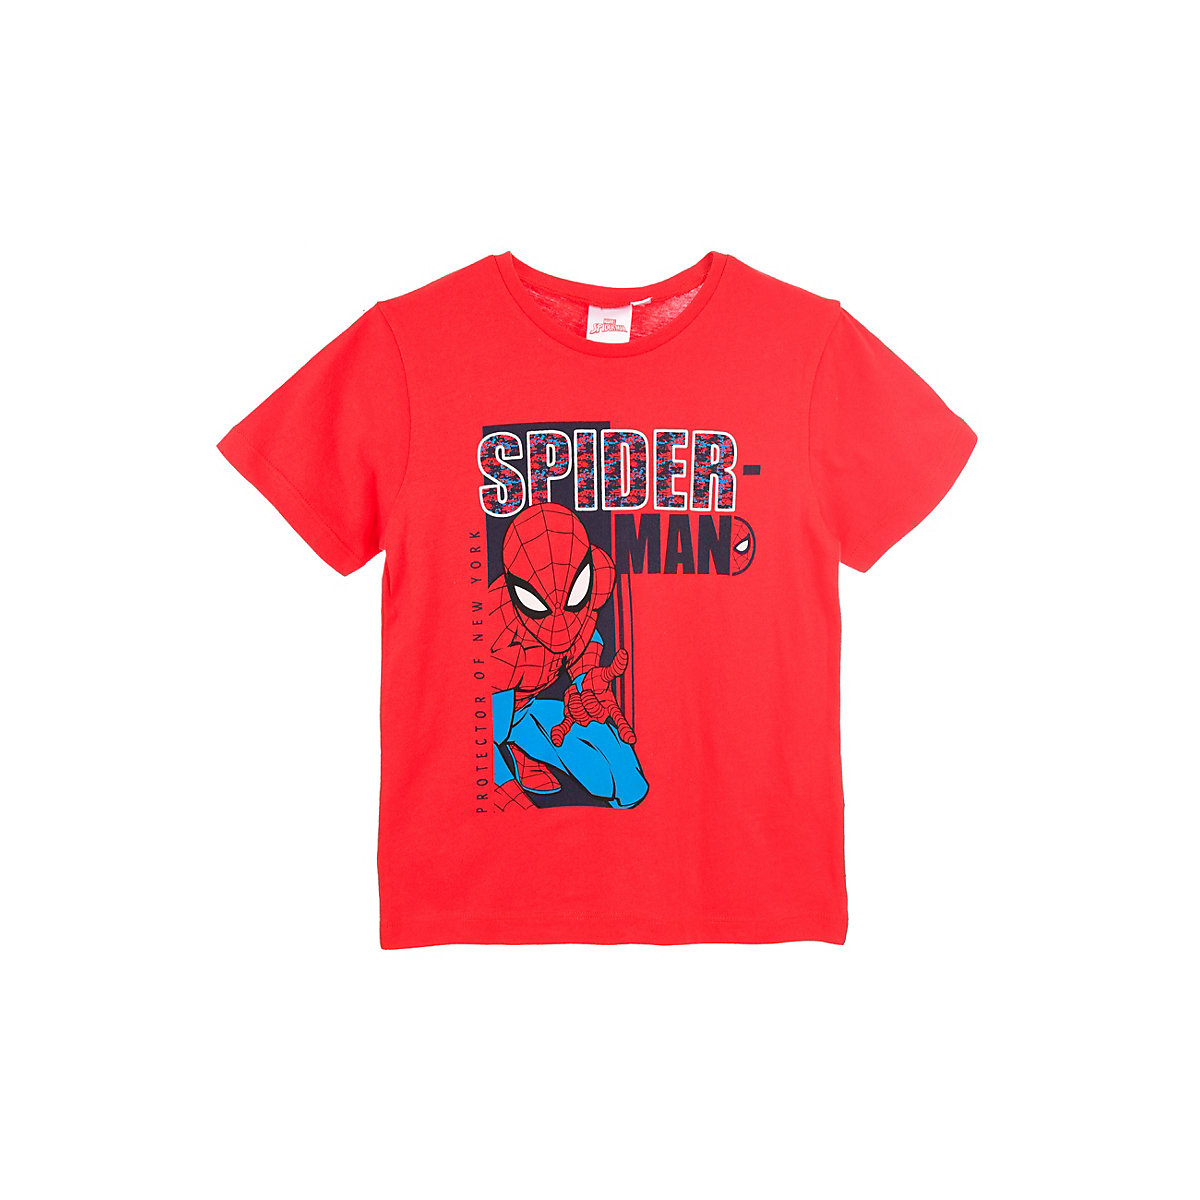 Spider-Man Spider-Man Jungen Kinder Kurzarm T-Shirt rot